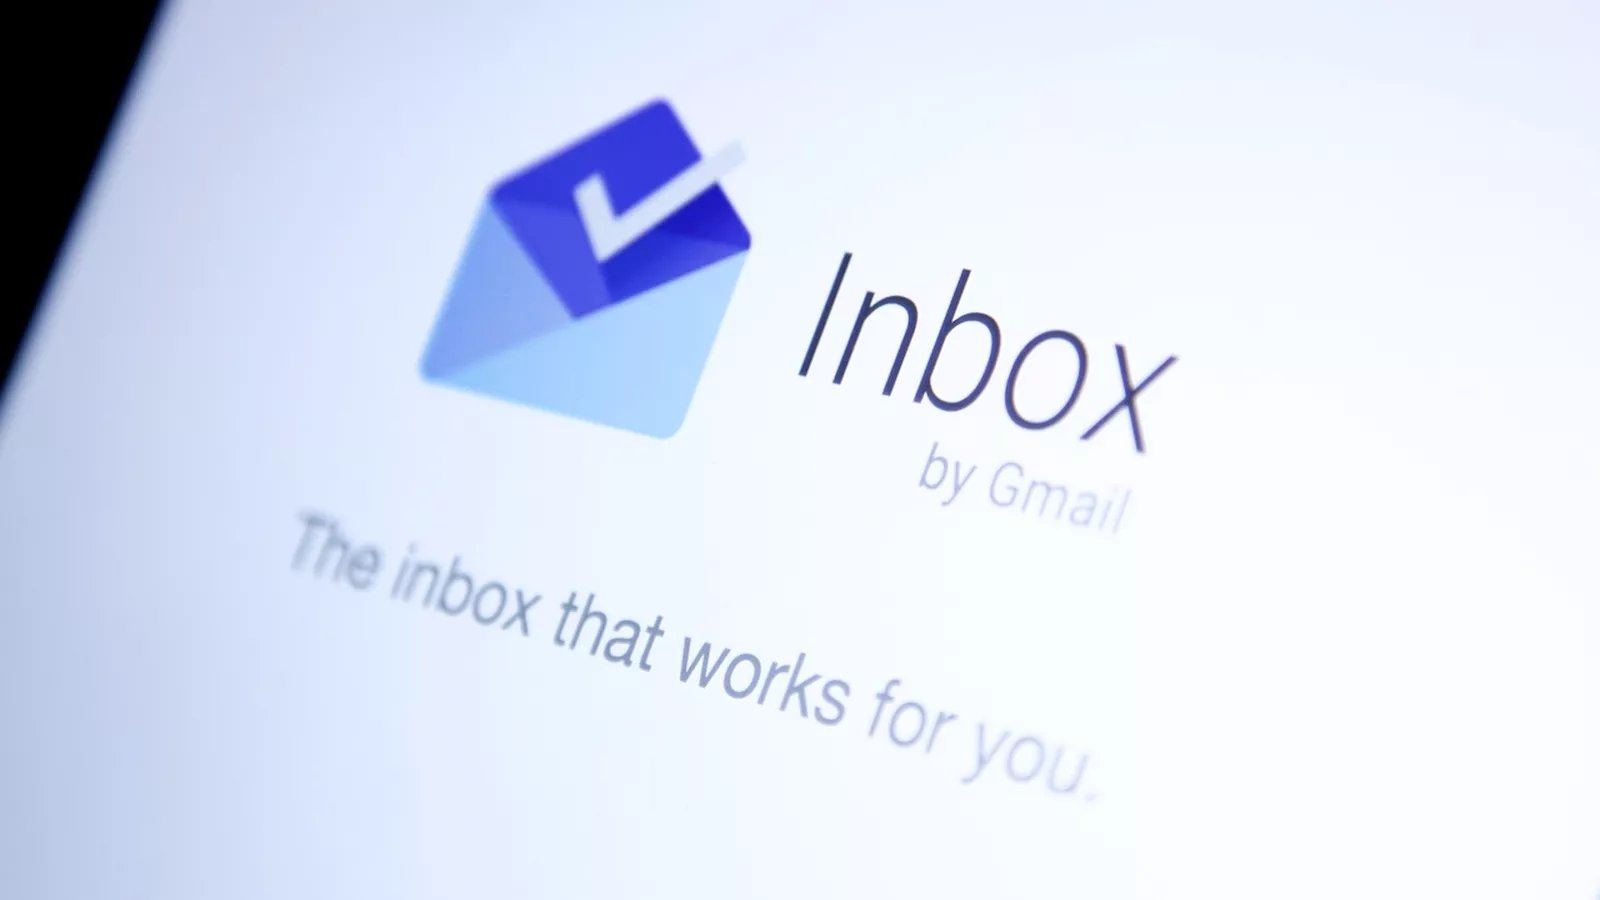 inbox by Google